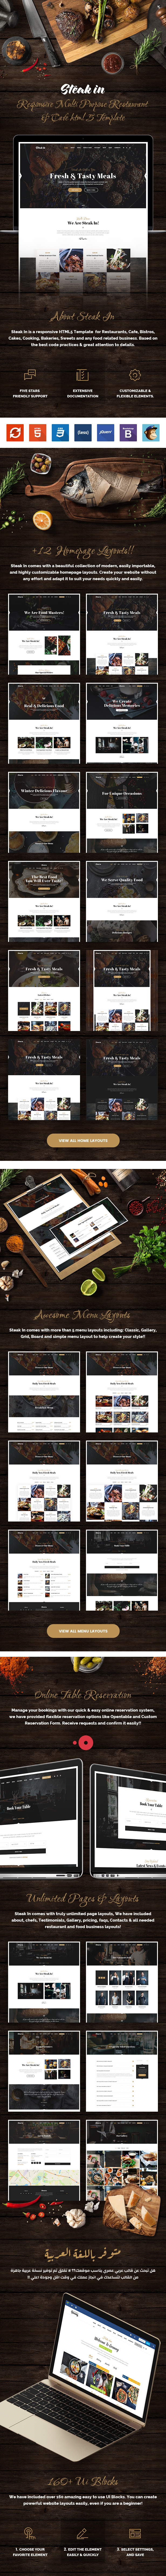 Steak In - Restaurant & Cafe HTML5 Template - 1